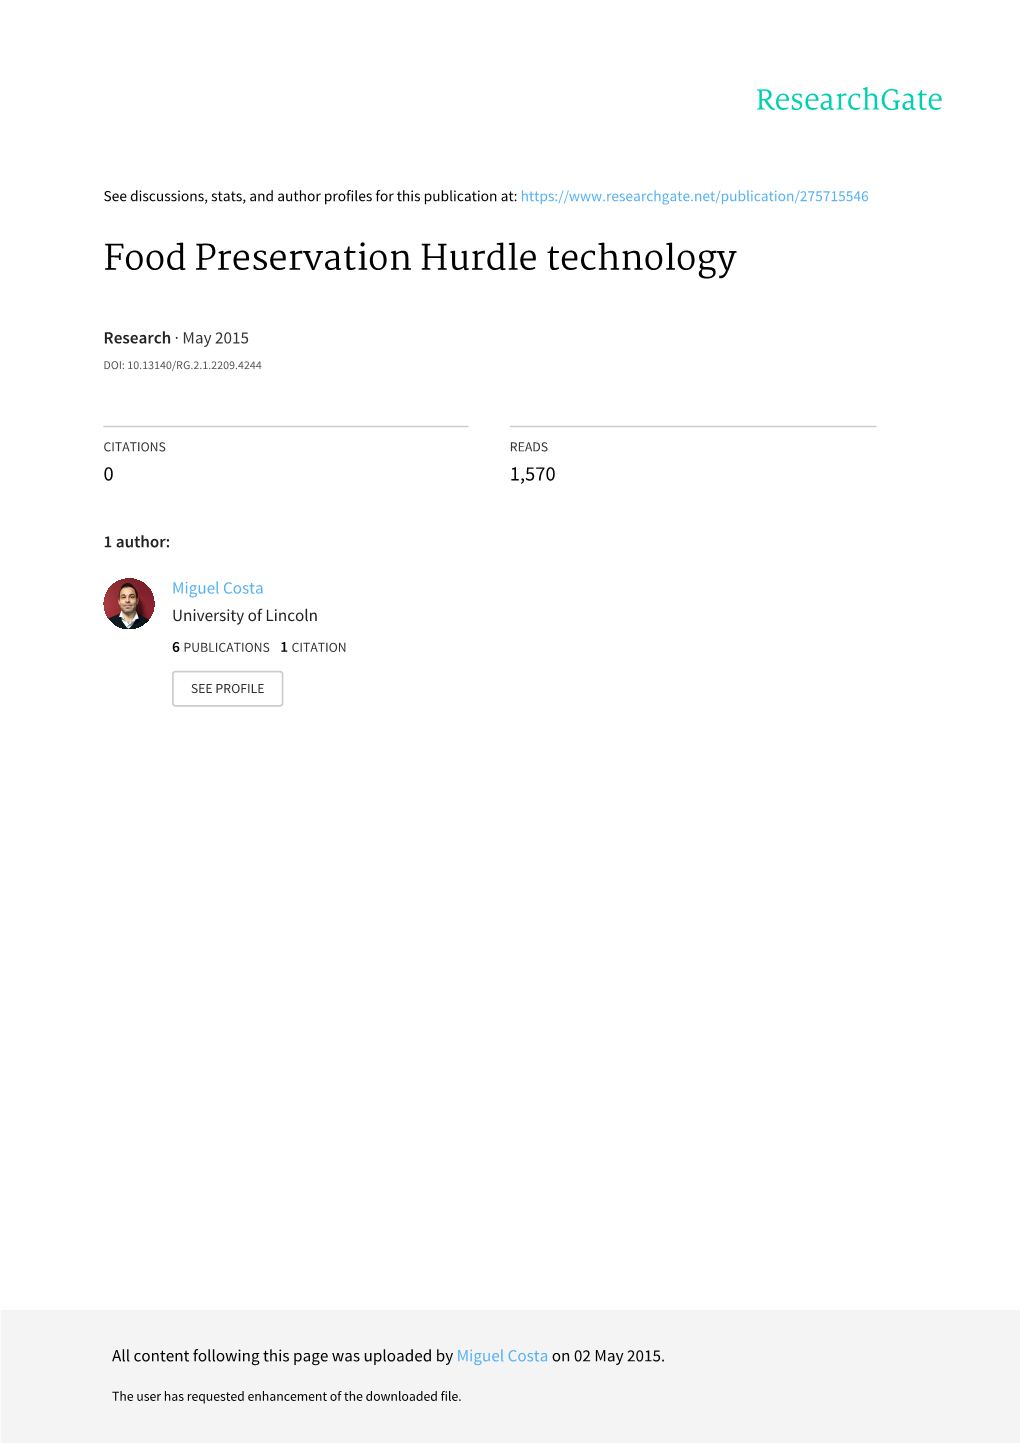 Food Preservation Hurdle Technology